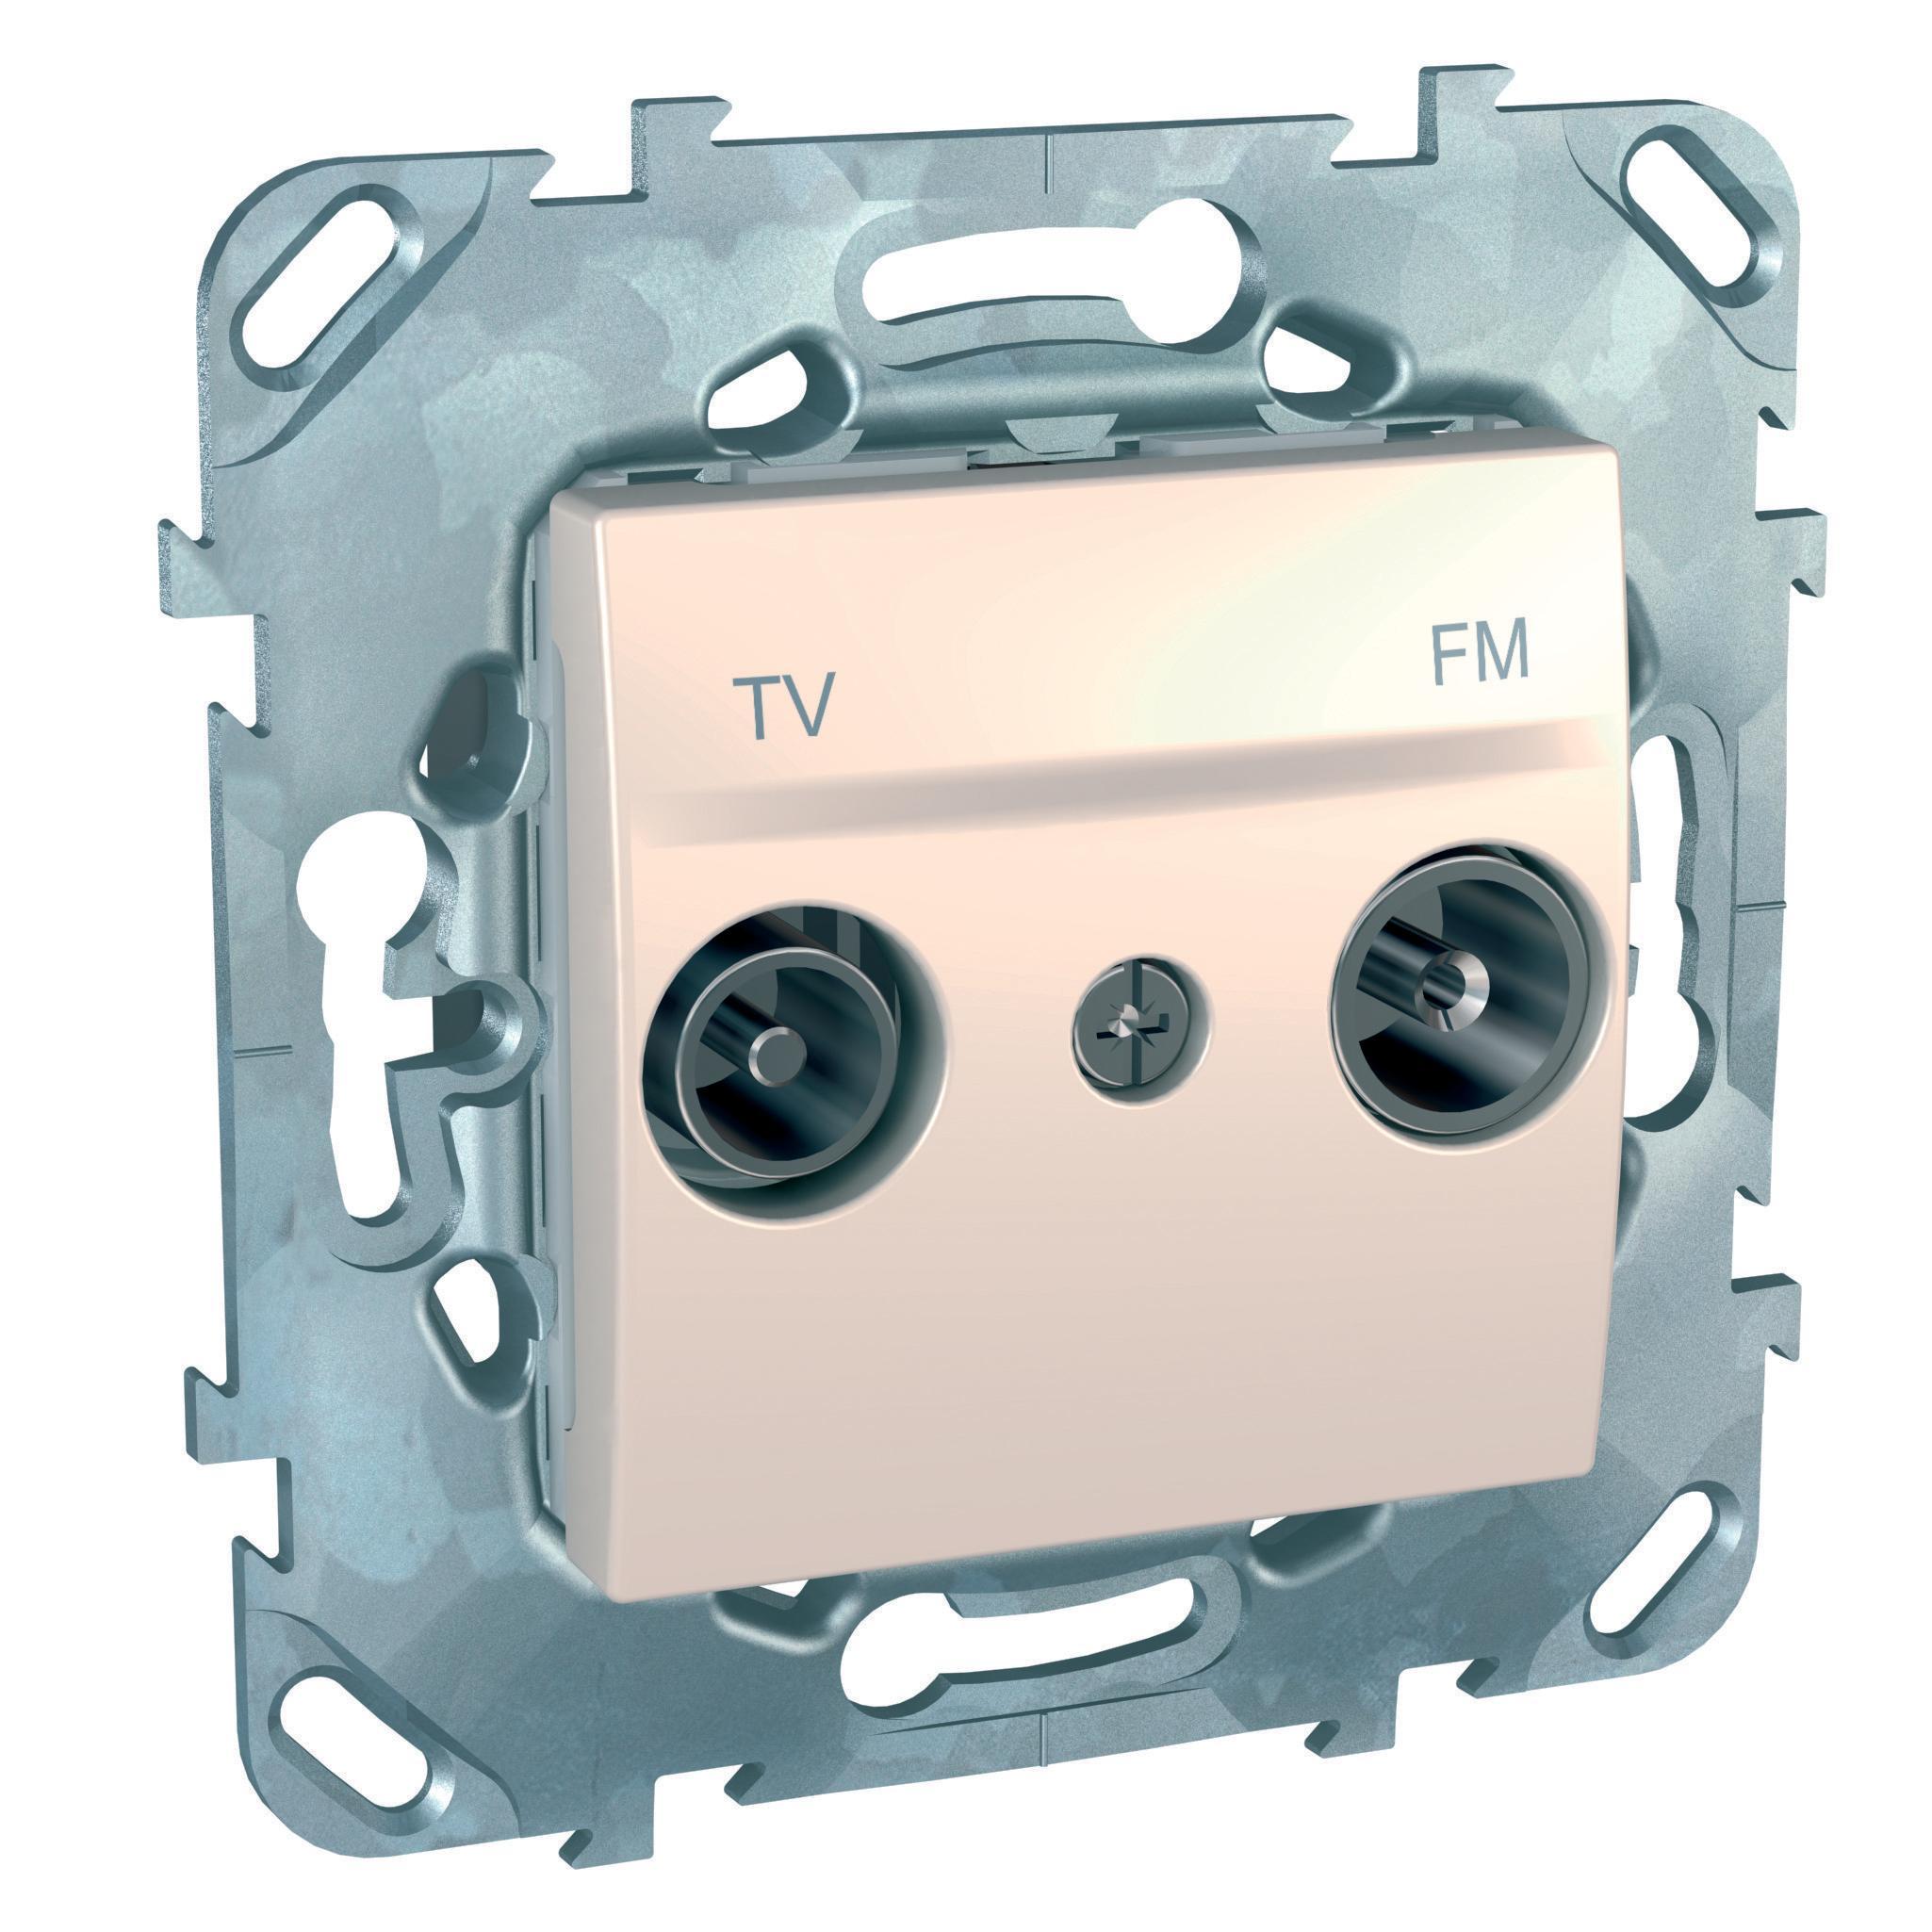  артикул MGU5.451.25ZD название Розетка ТВ и радио единственная , Бежевый, серия Unica, Schneider Electric